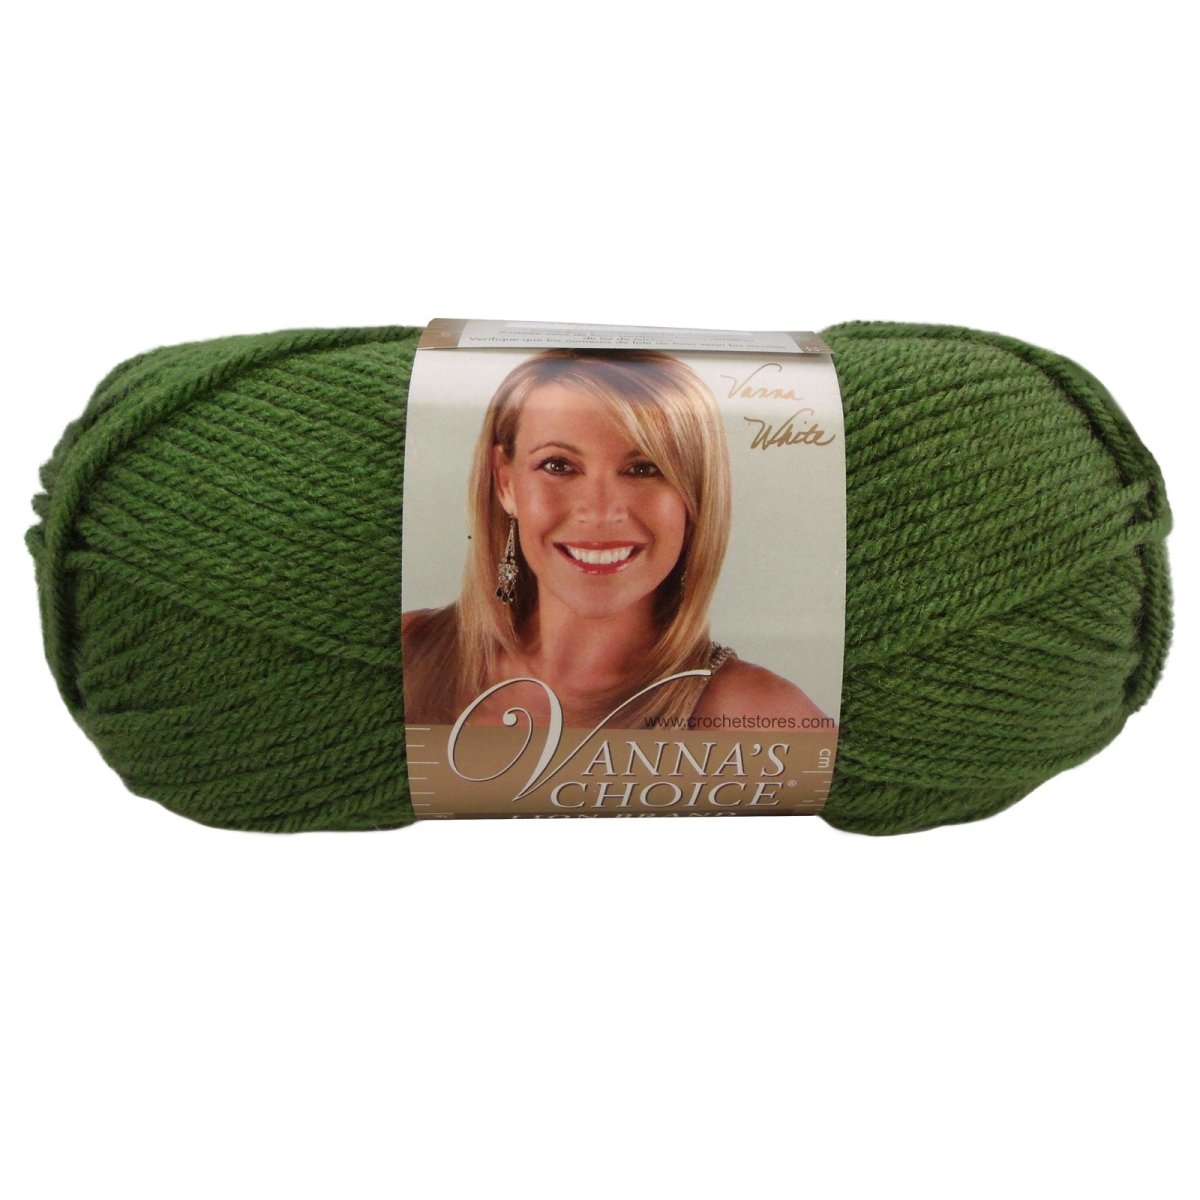 VANNAS CHOICE - Crochetstores860-172